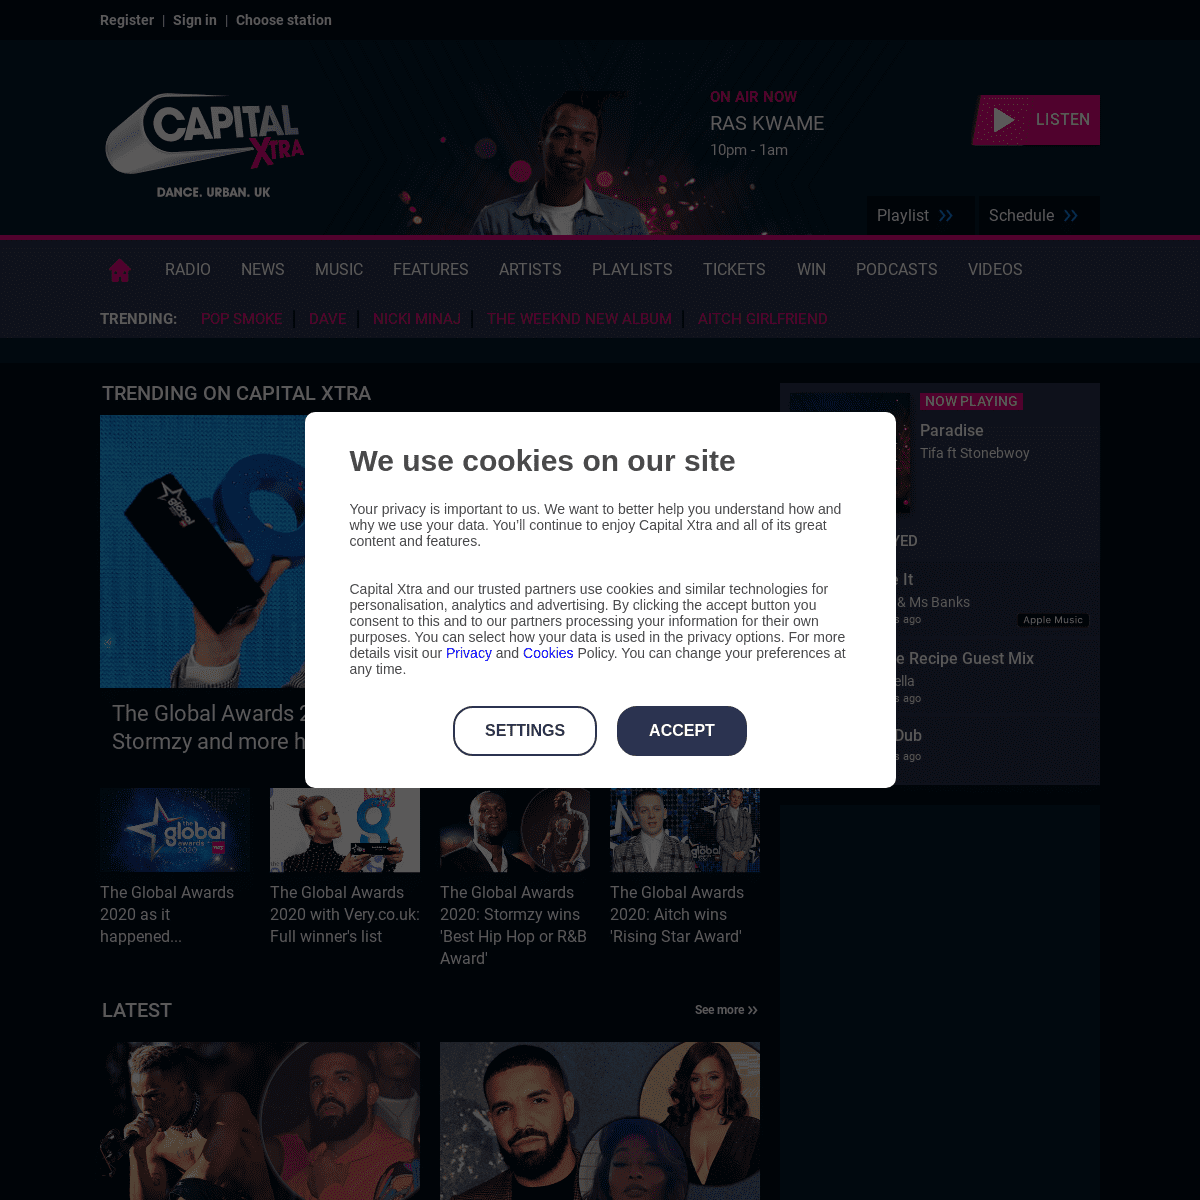 A complete backup of capitalxtra.com